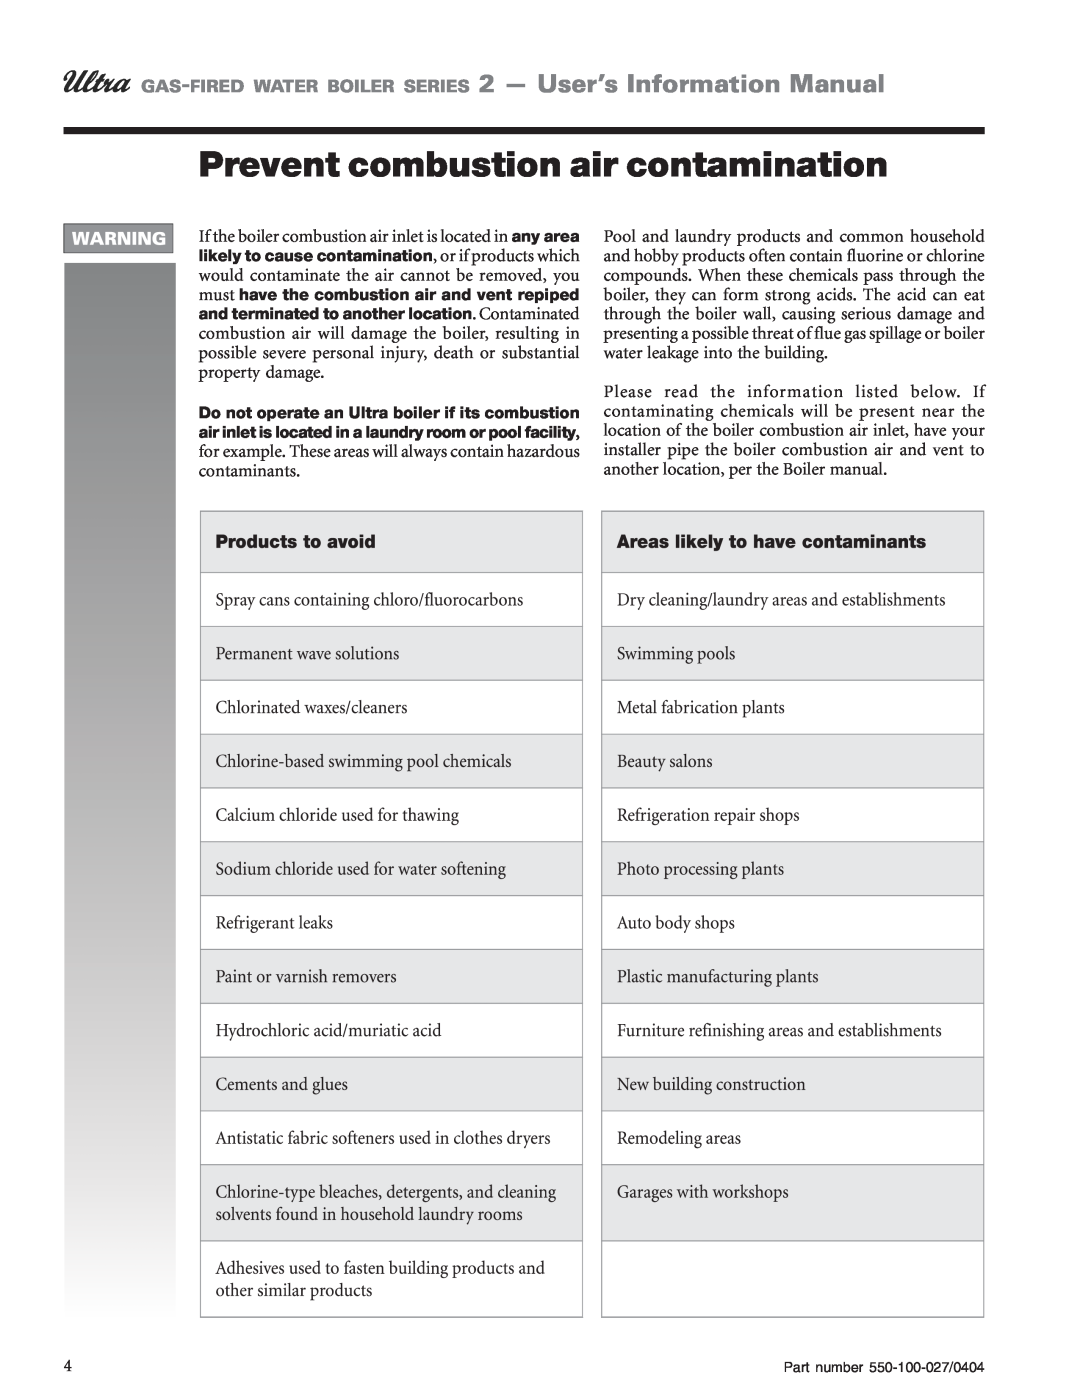 Weil-McLain Series 2 manual Prevent combustion air contamination 